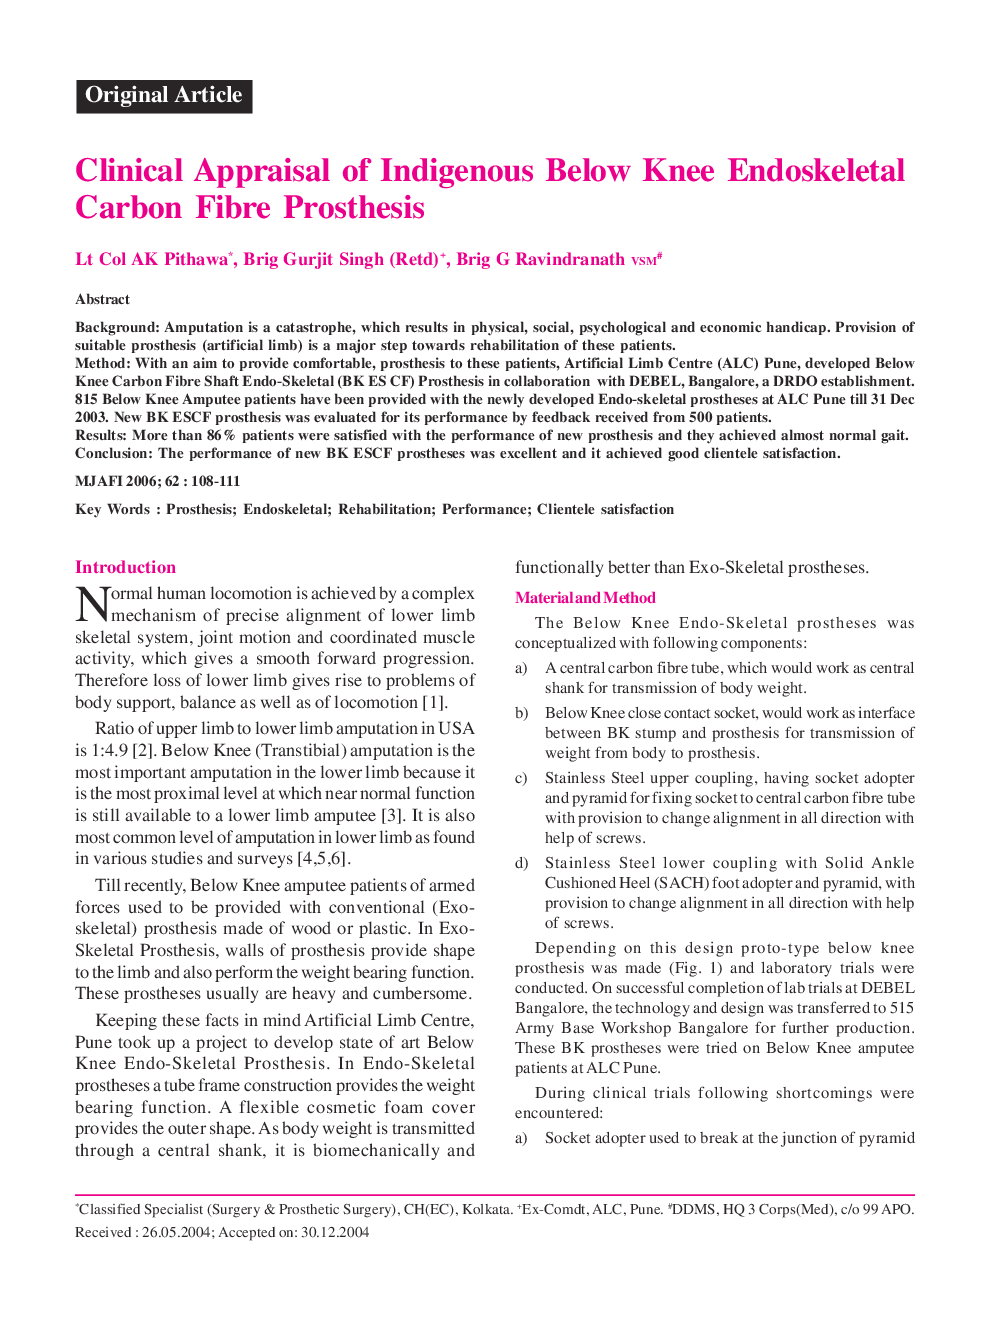 Clinical Appraisal of Indigenous Below Knee Endoskeletal Carbon Fibre Prosthesis